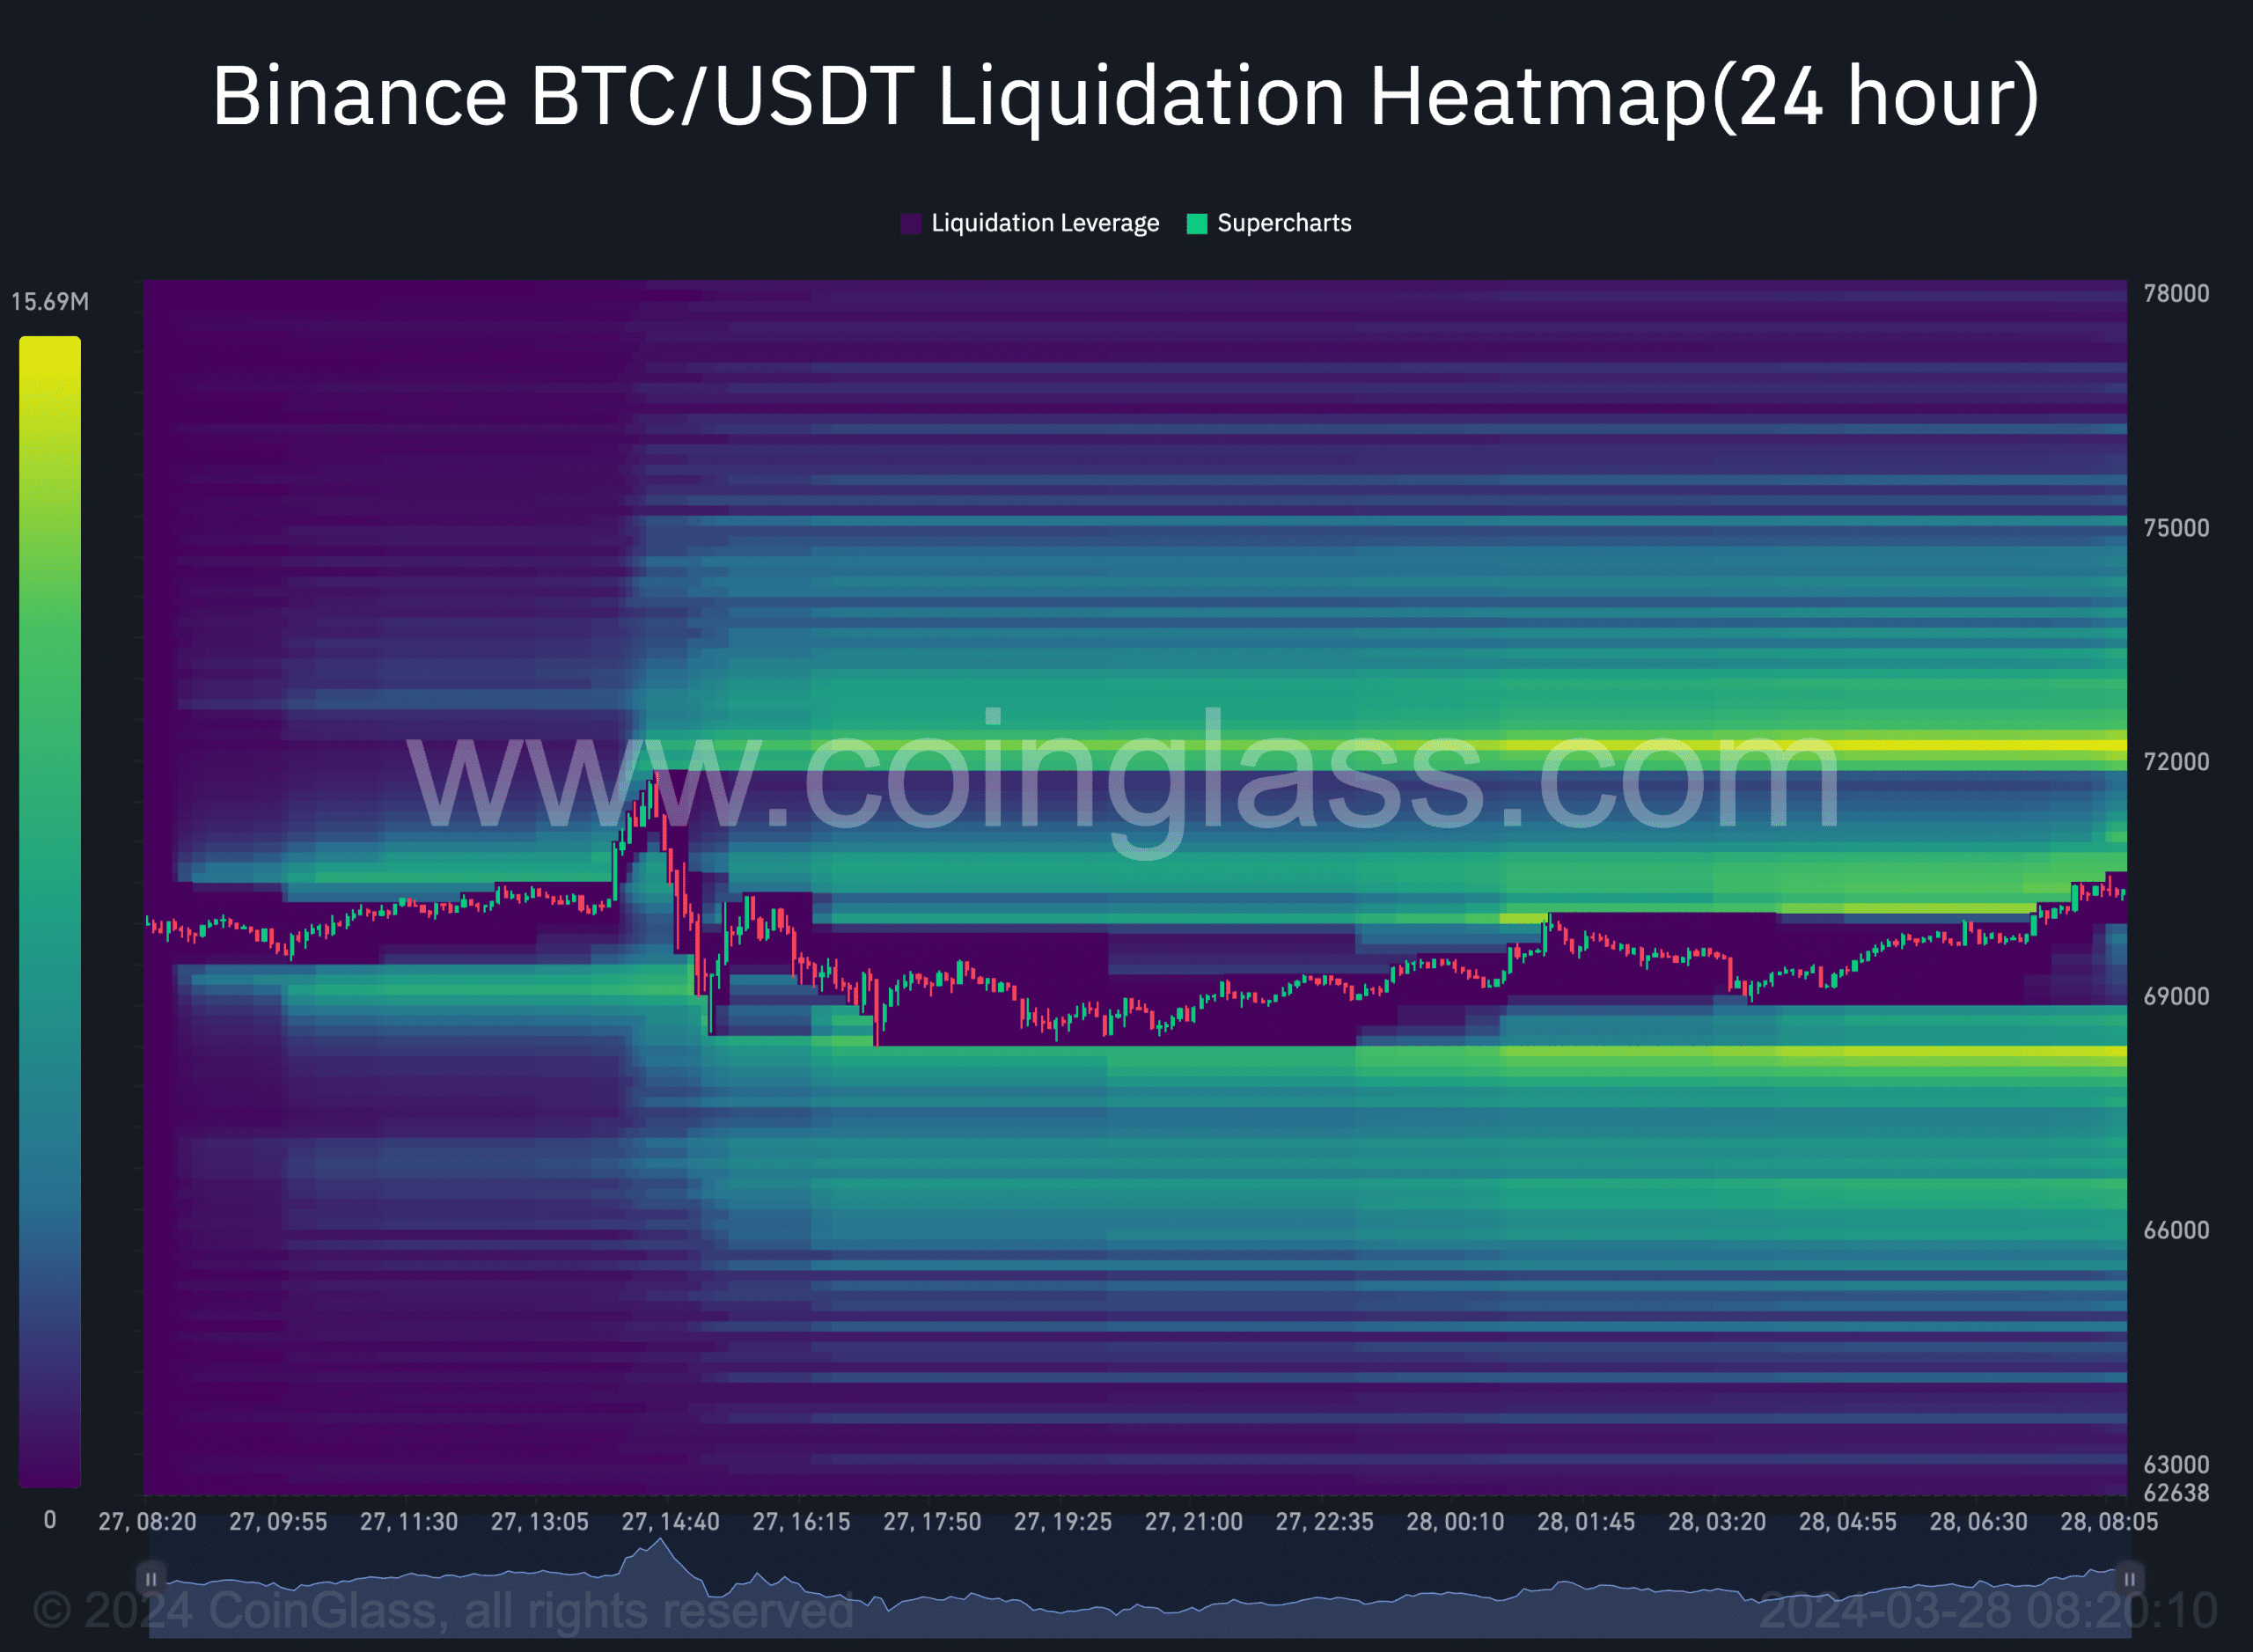 Bitcoin's liquidation heatmap suggests more short liquidations